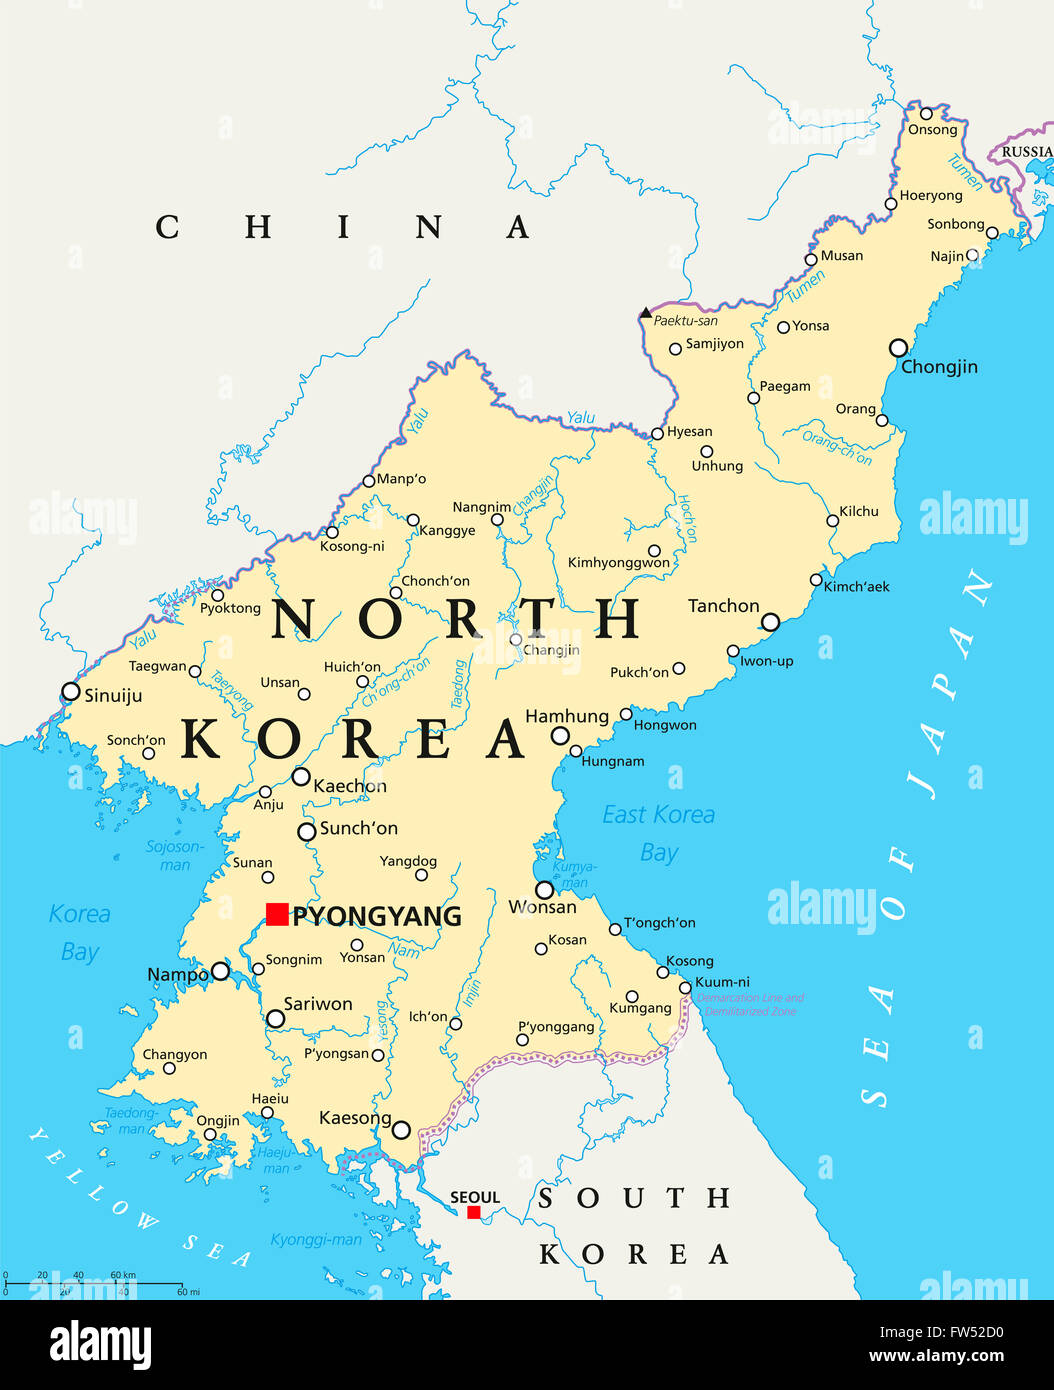 Nordkorea politische Karte mit Hauptstadt Pjöngjang, Landesgrenzen, wichtige Städte, Flüsse und Seen. Englisch beschriften. Stockfoto